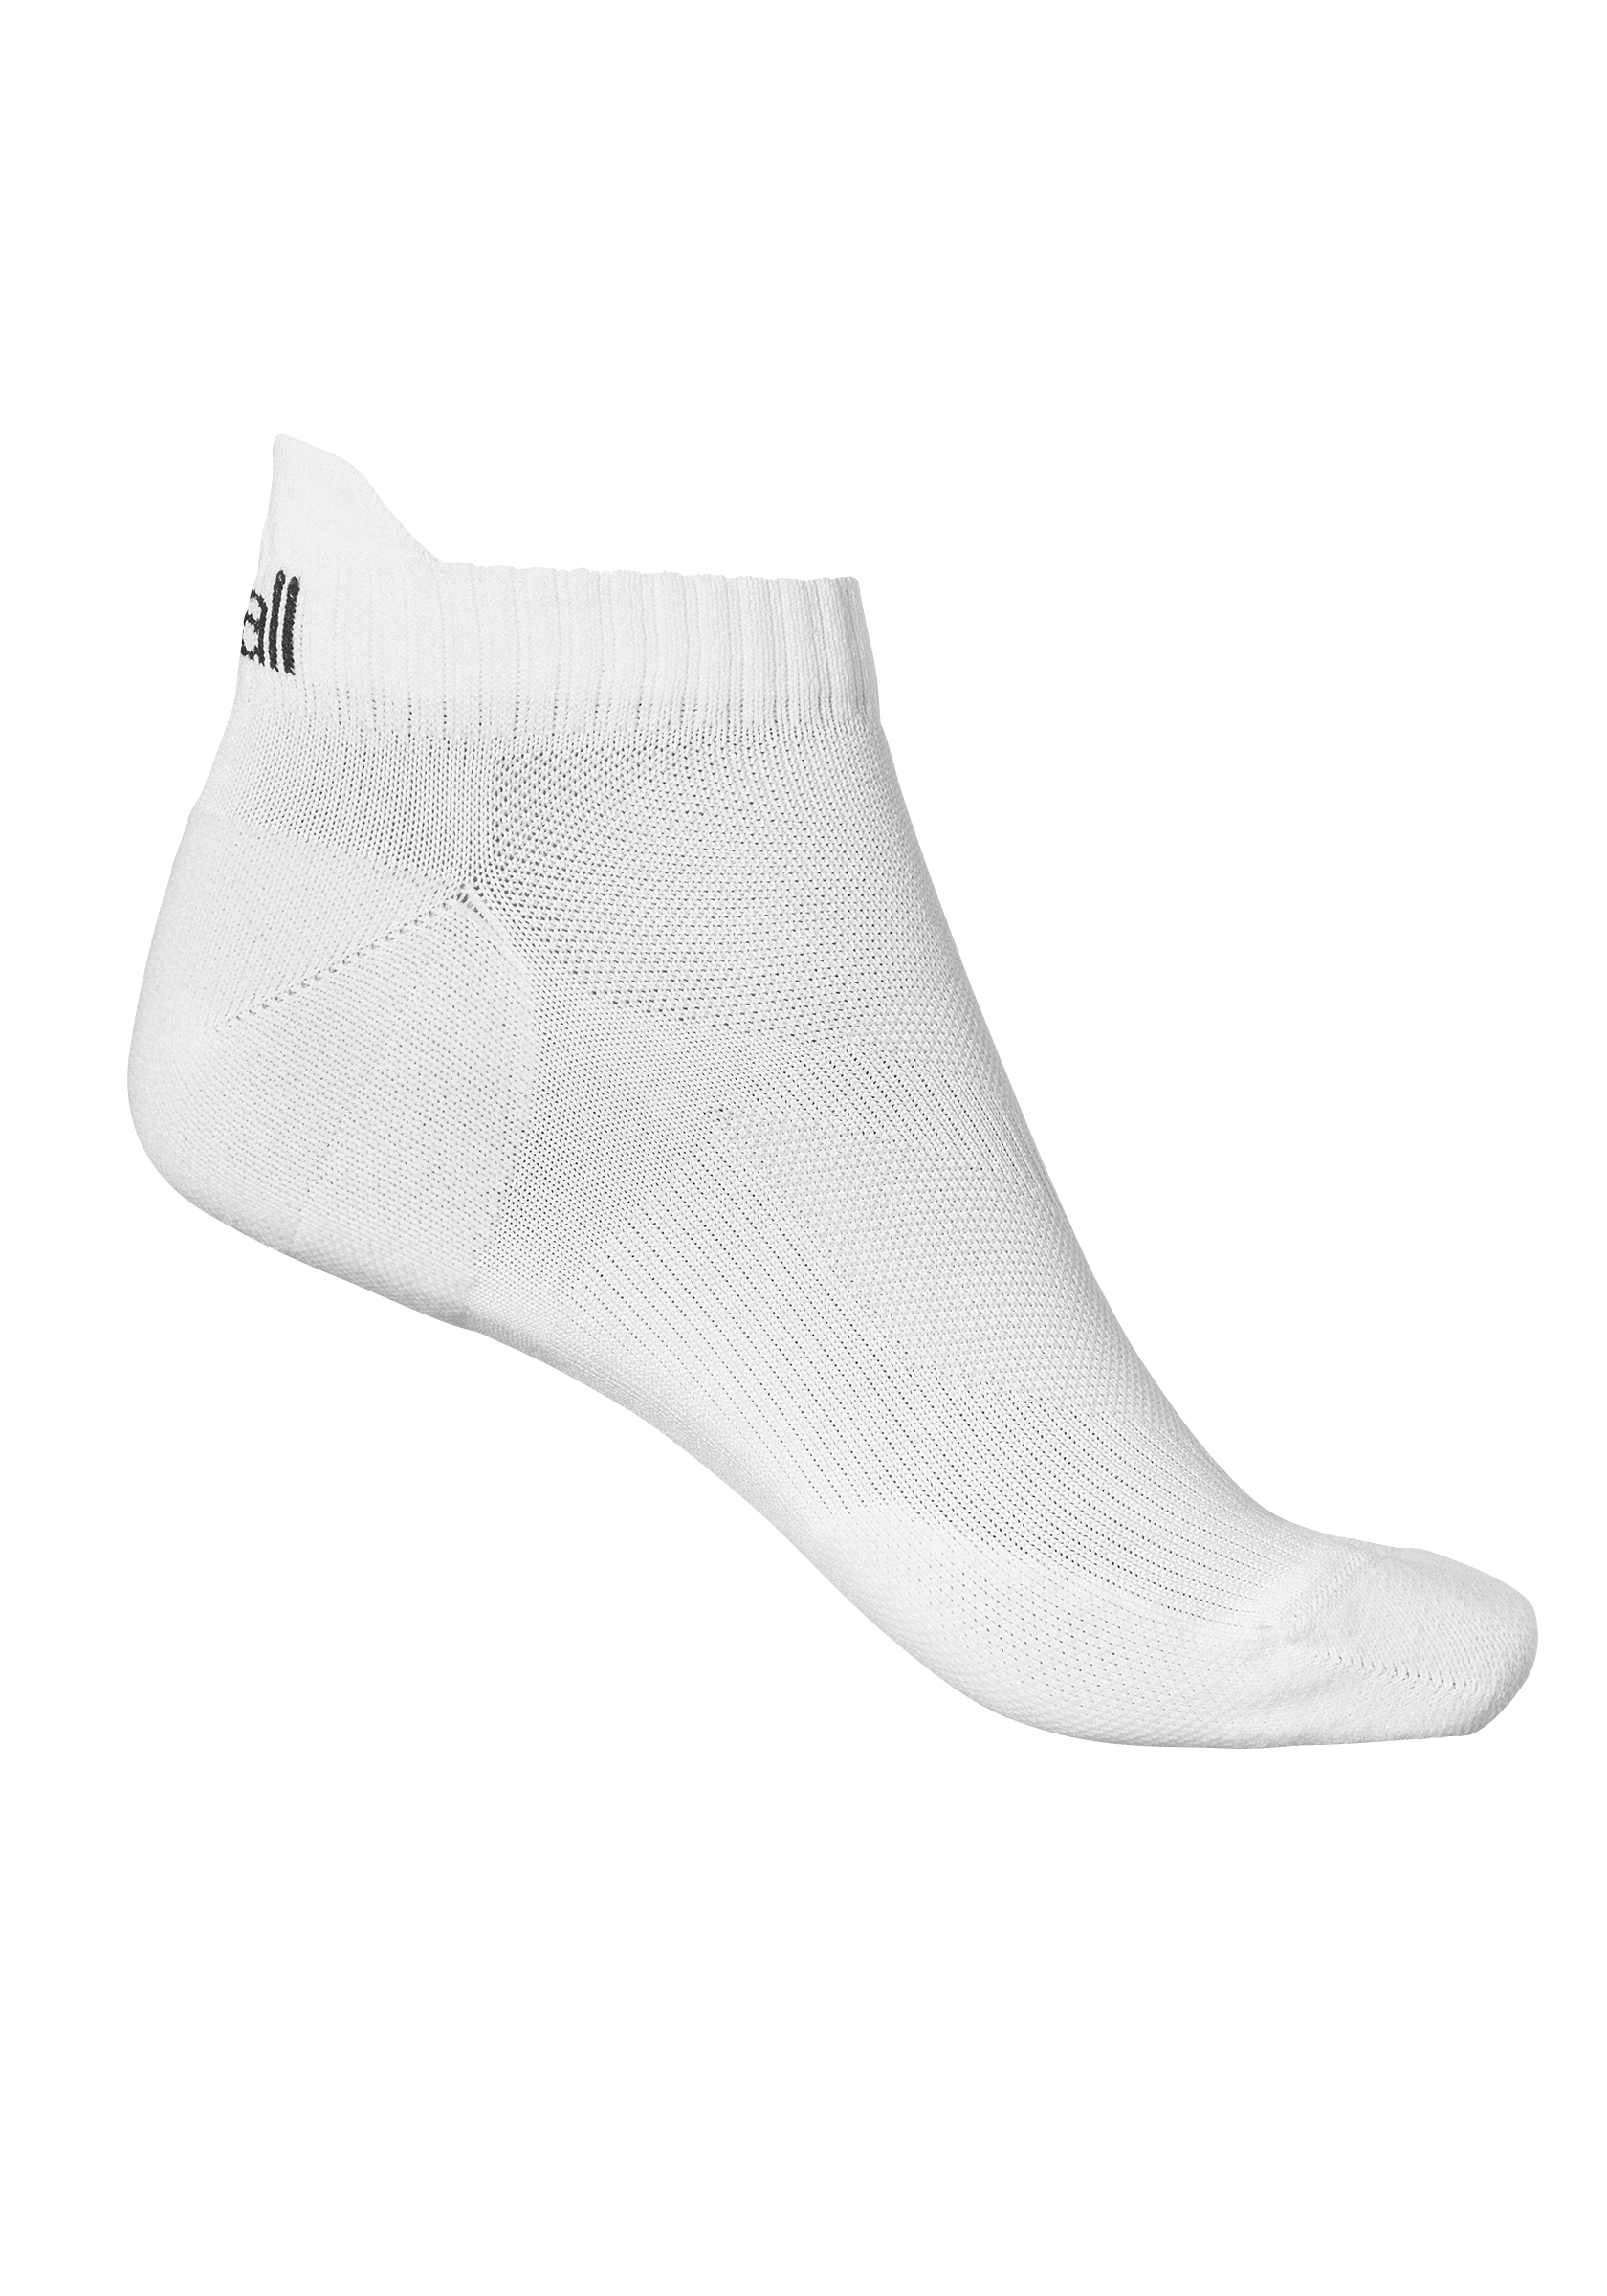 Run sock - White